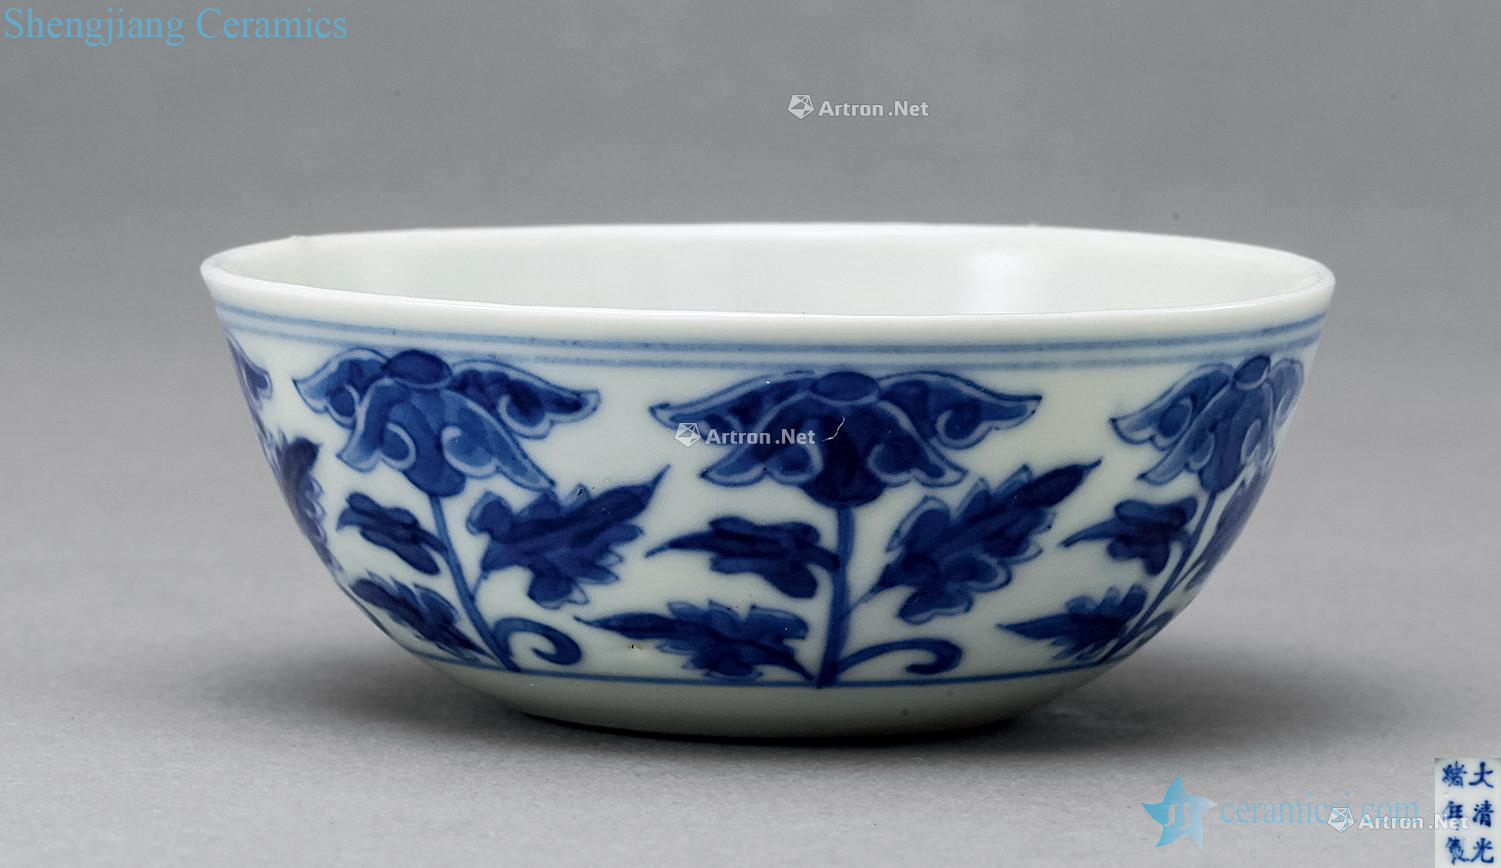 Qing guangxu Blue and white flowers lying foot bowl